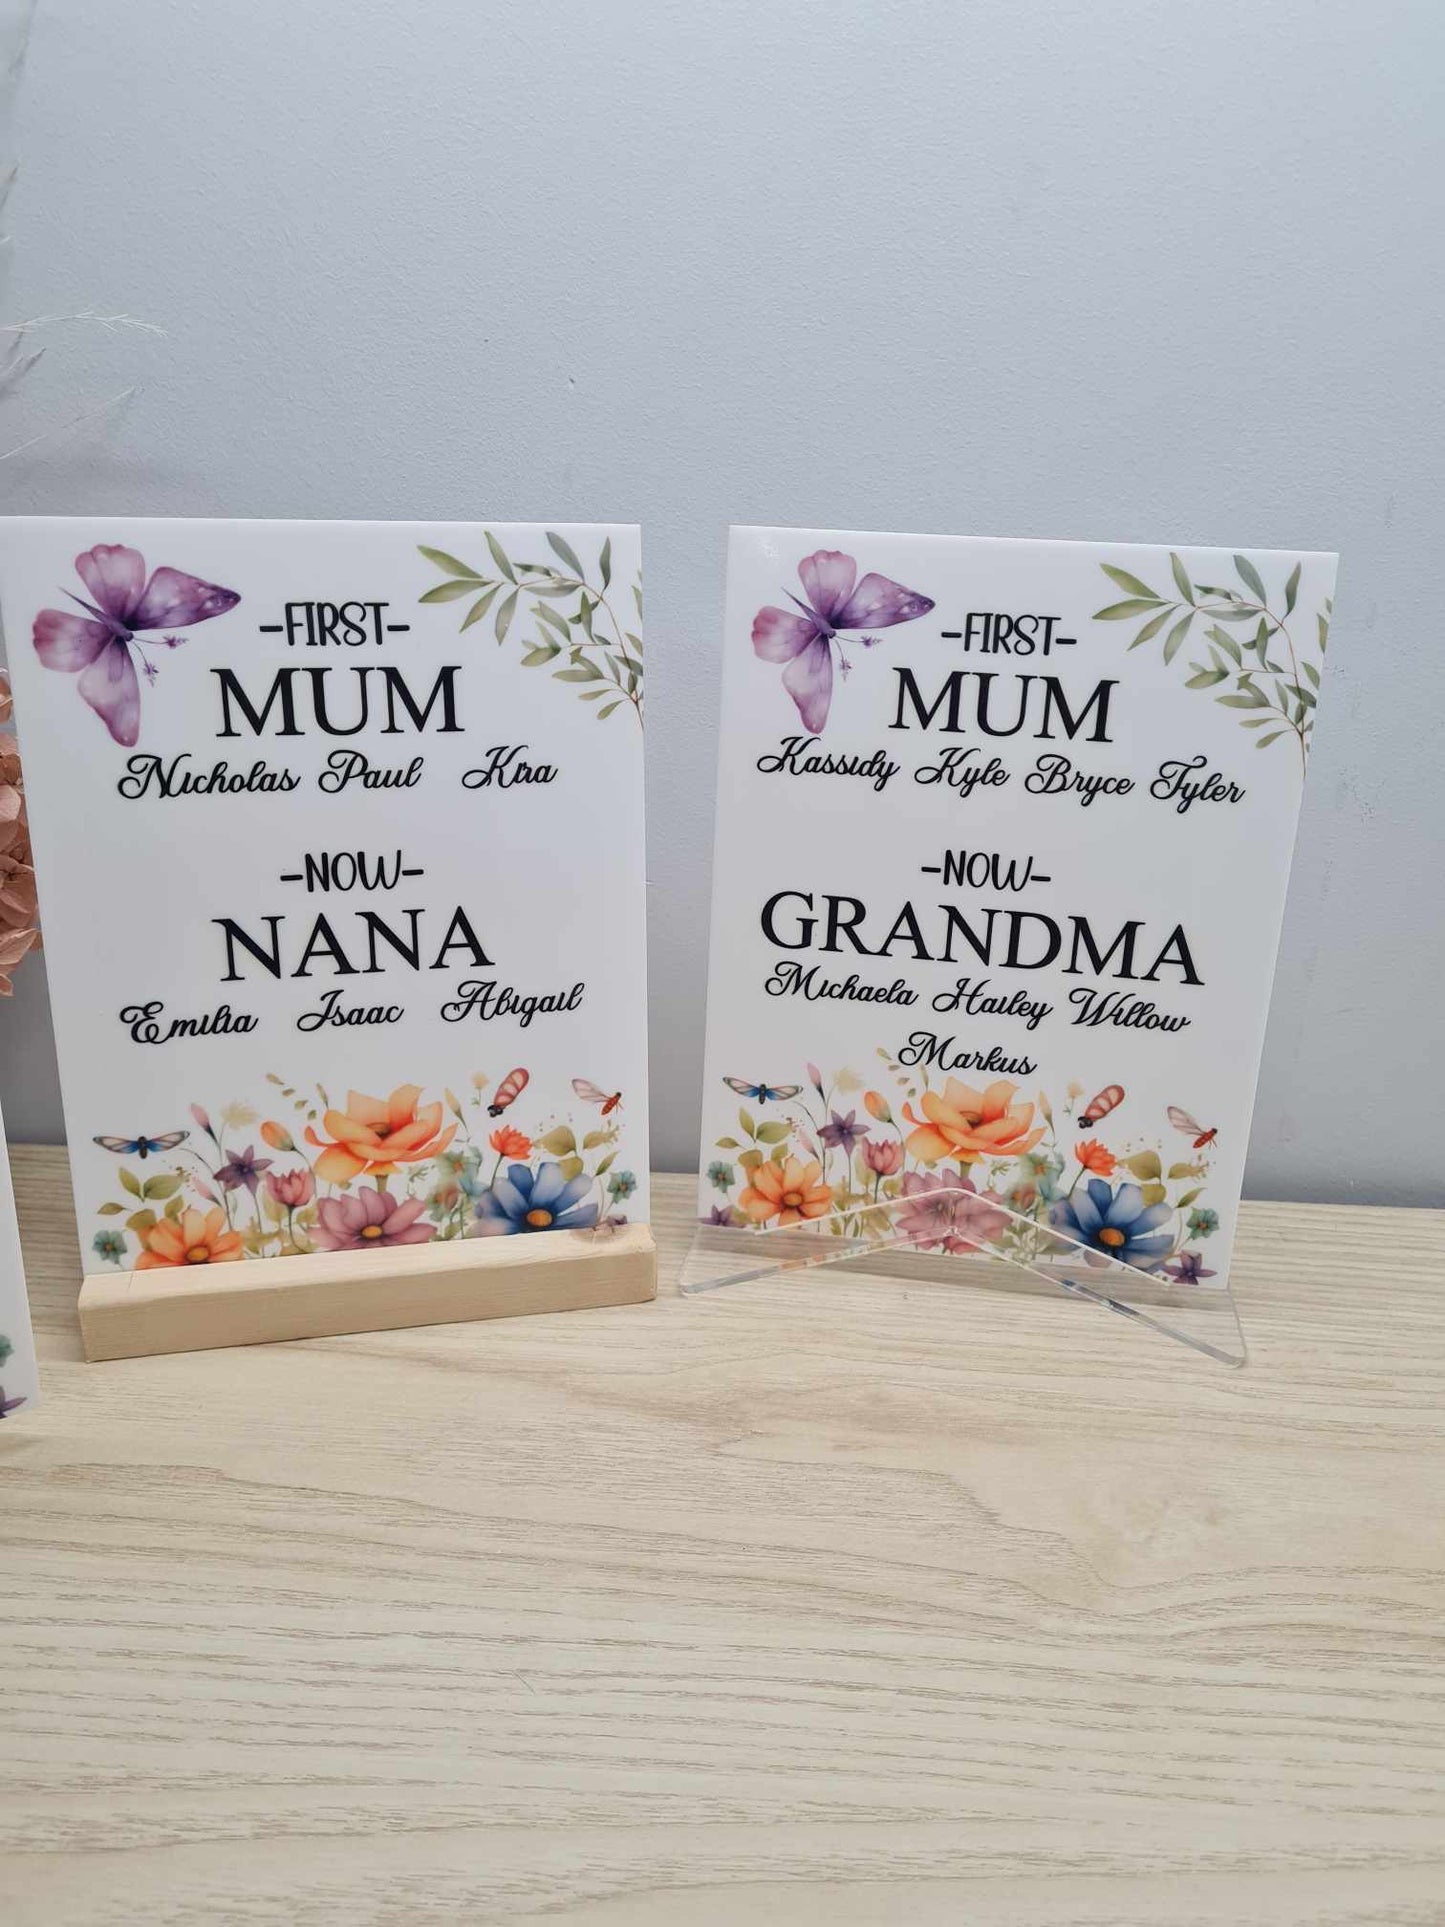 First Mum - Now Nana Plaque